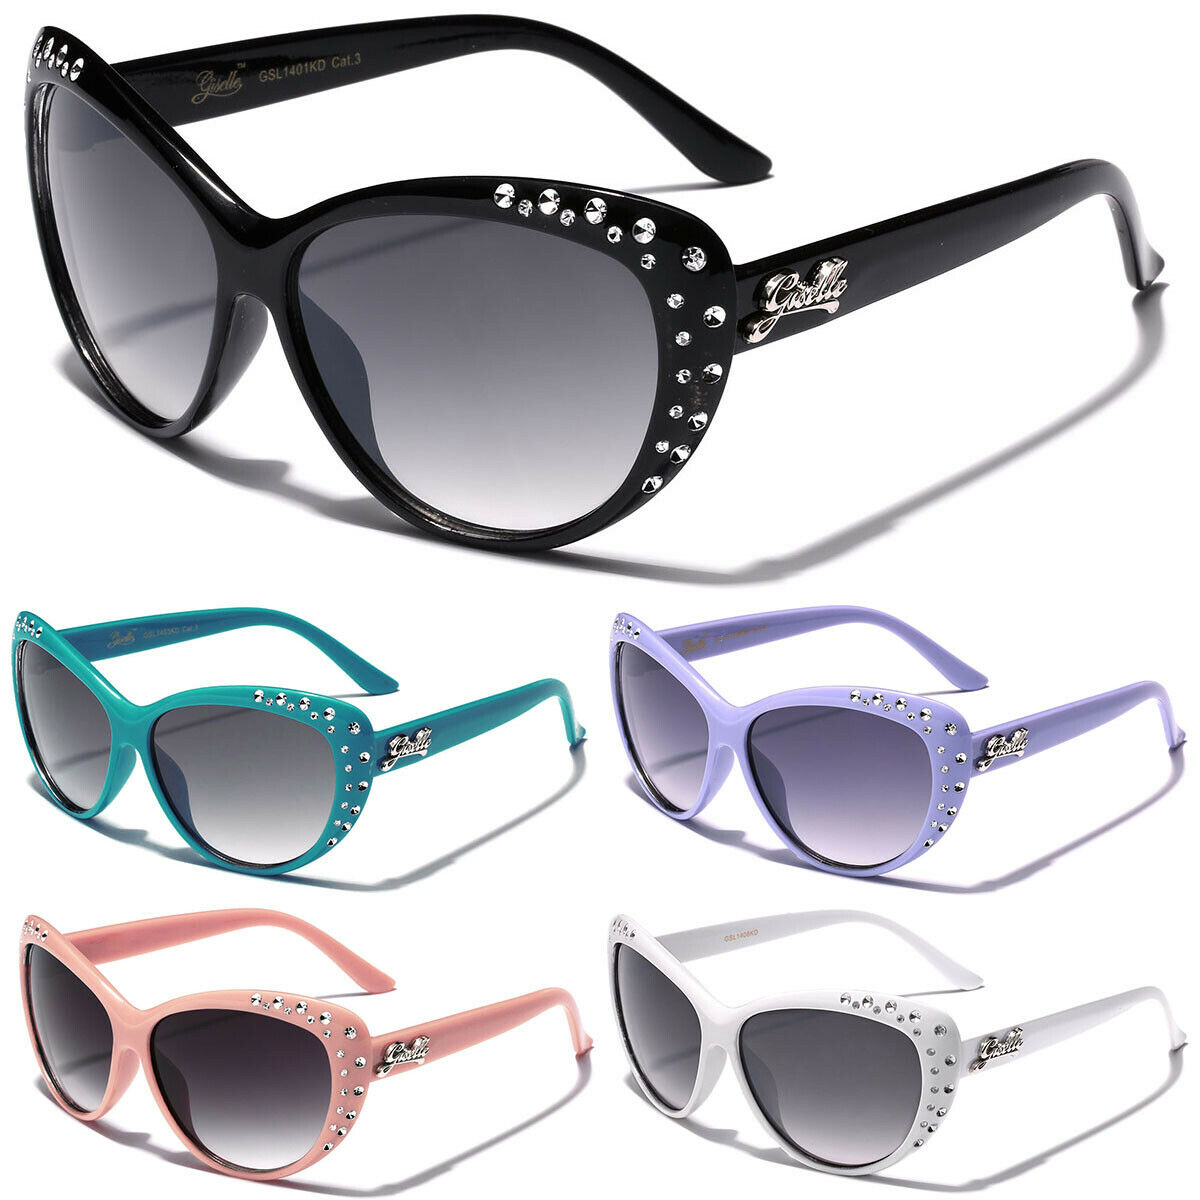 Kids Rhinestone Cat-eye Sunglasses For Girls Cool Fashion Designer Glasses New